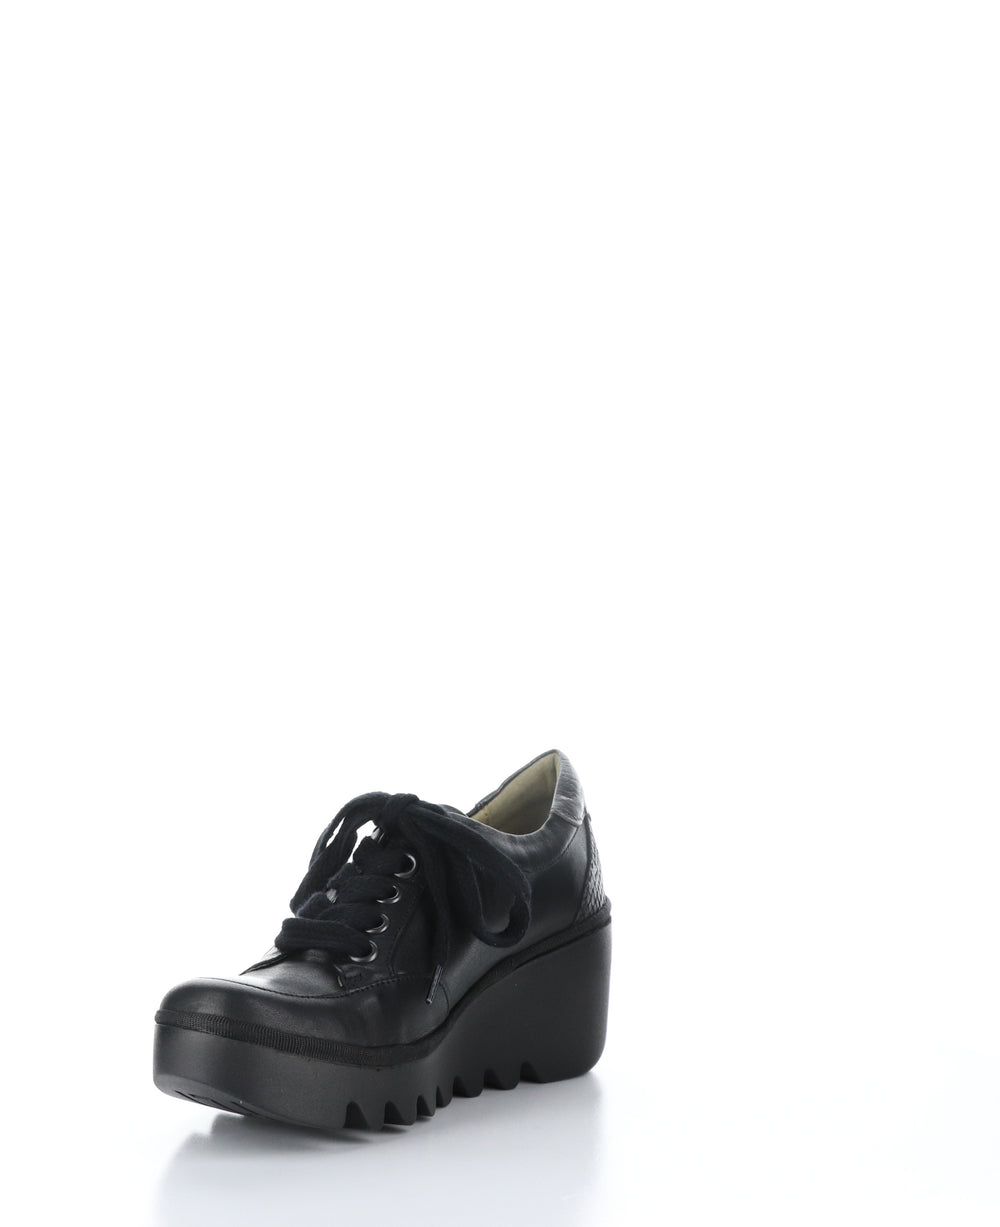 BINO347FLY Black/Graphite Round Toe Shoes